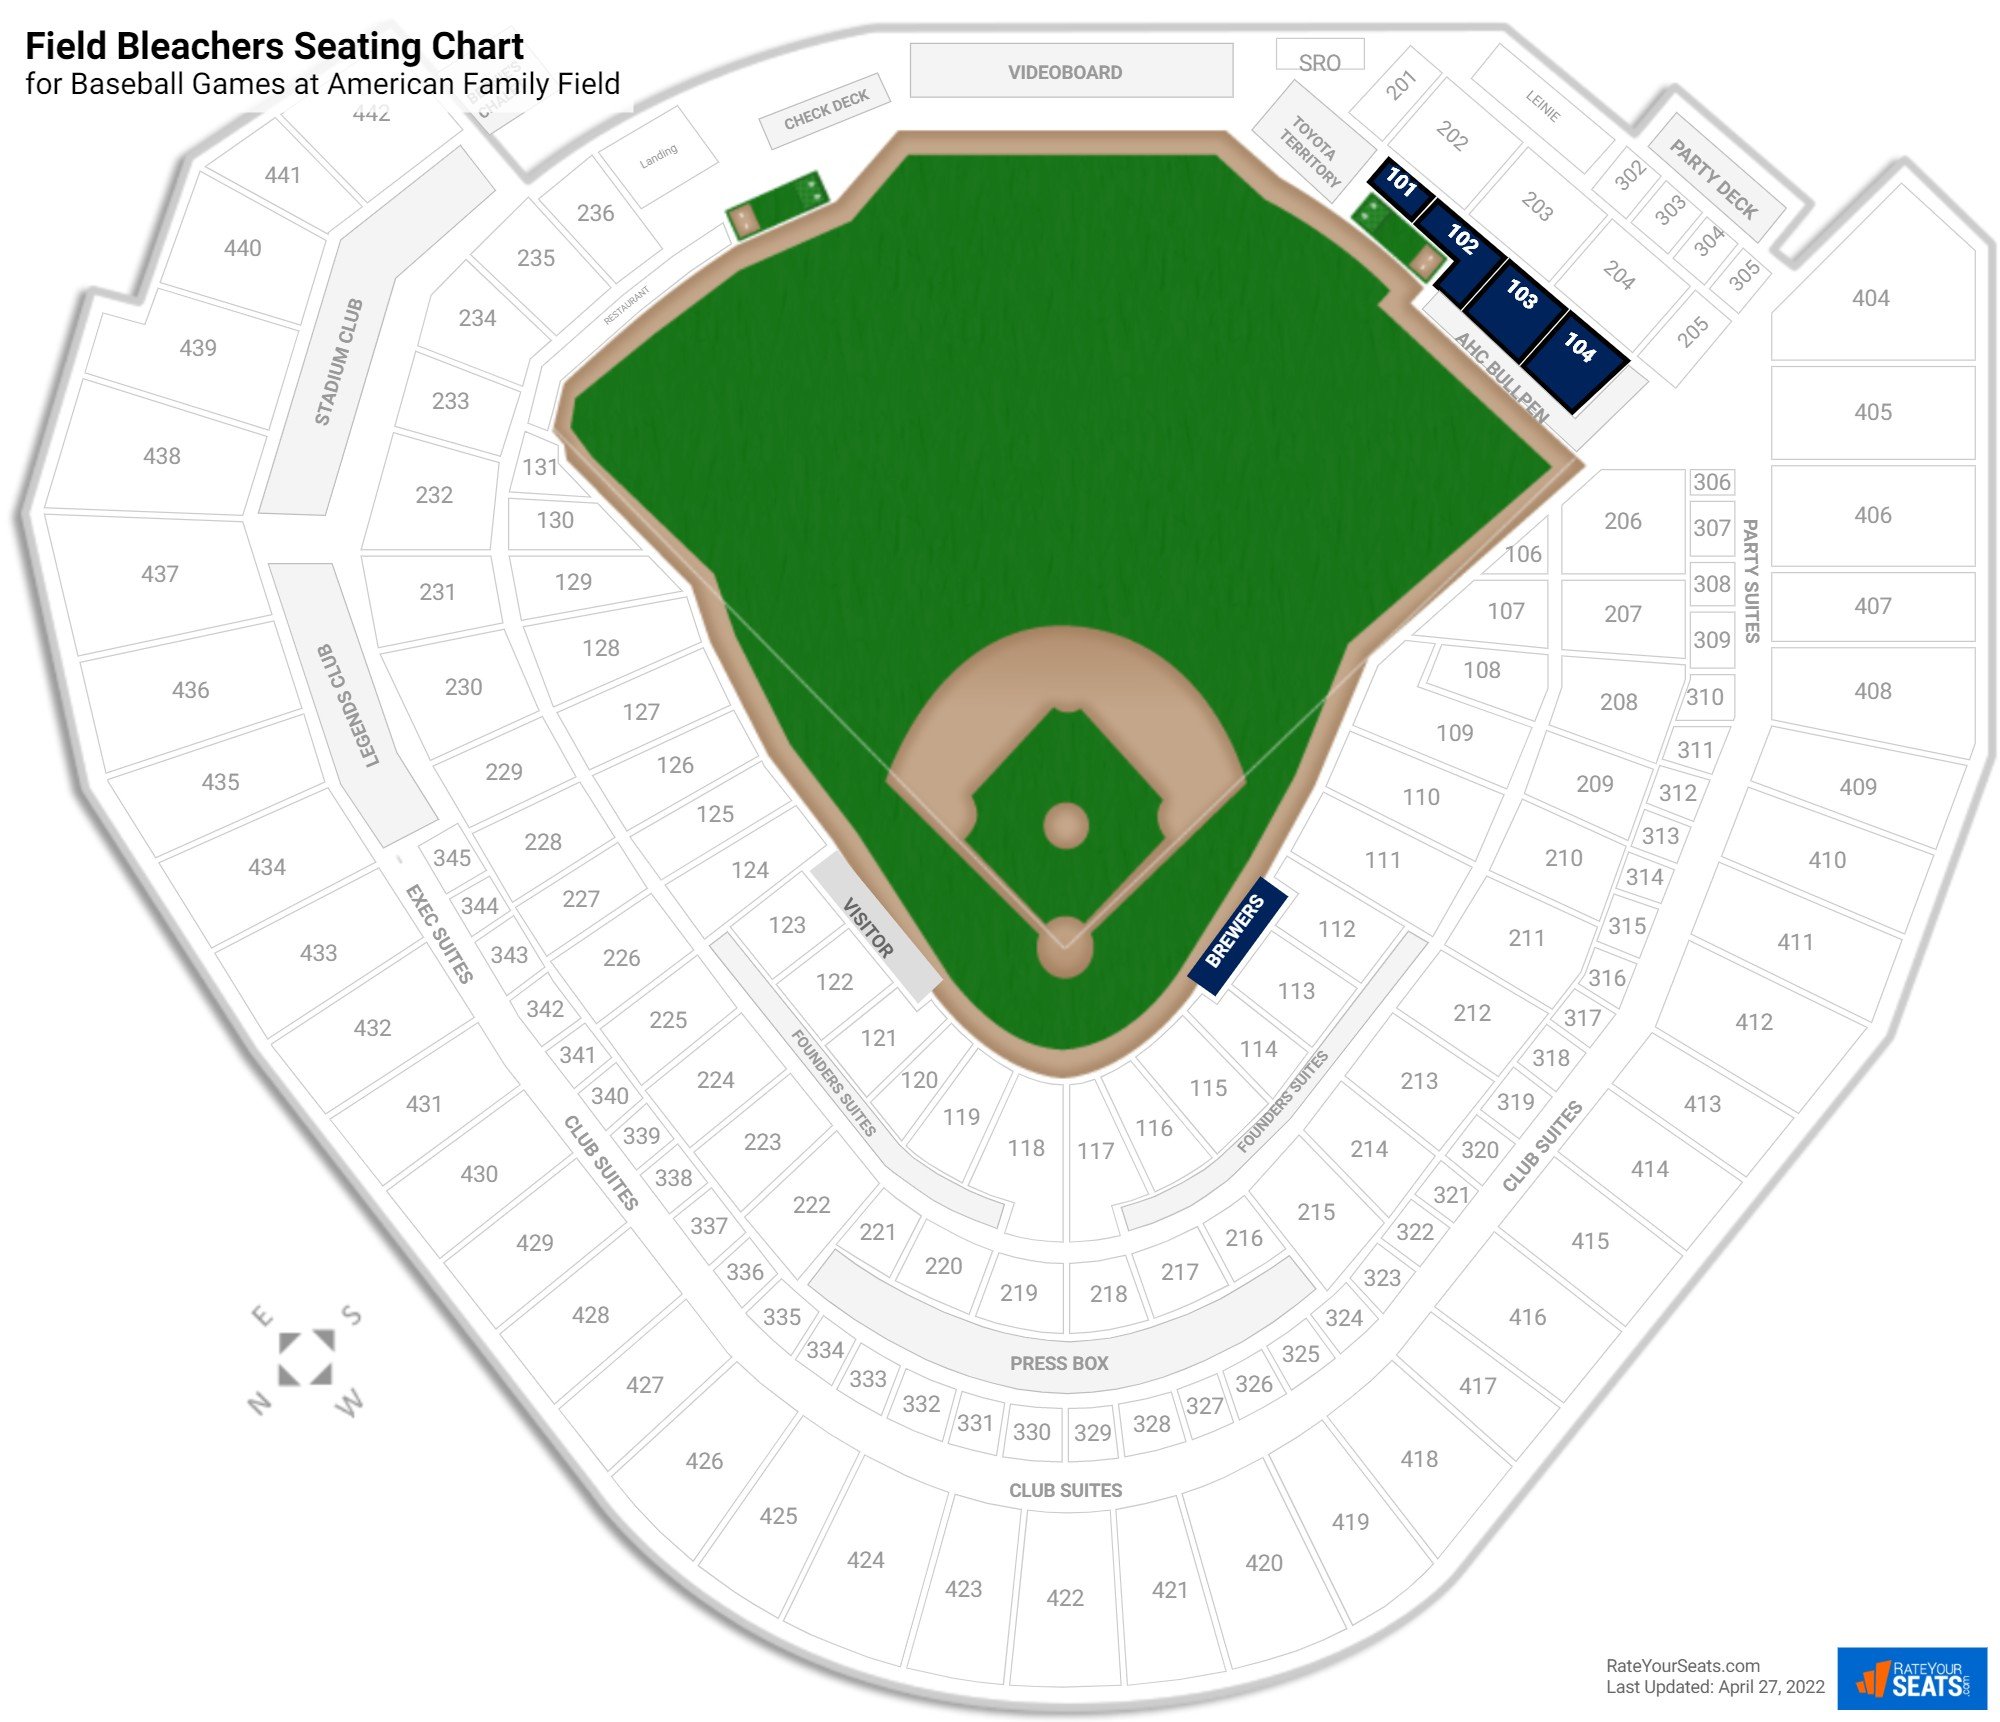 Baseball Field Bleachers Seating Chart at American Family Field